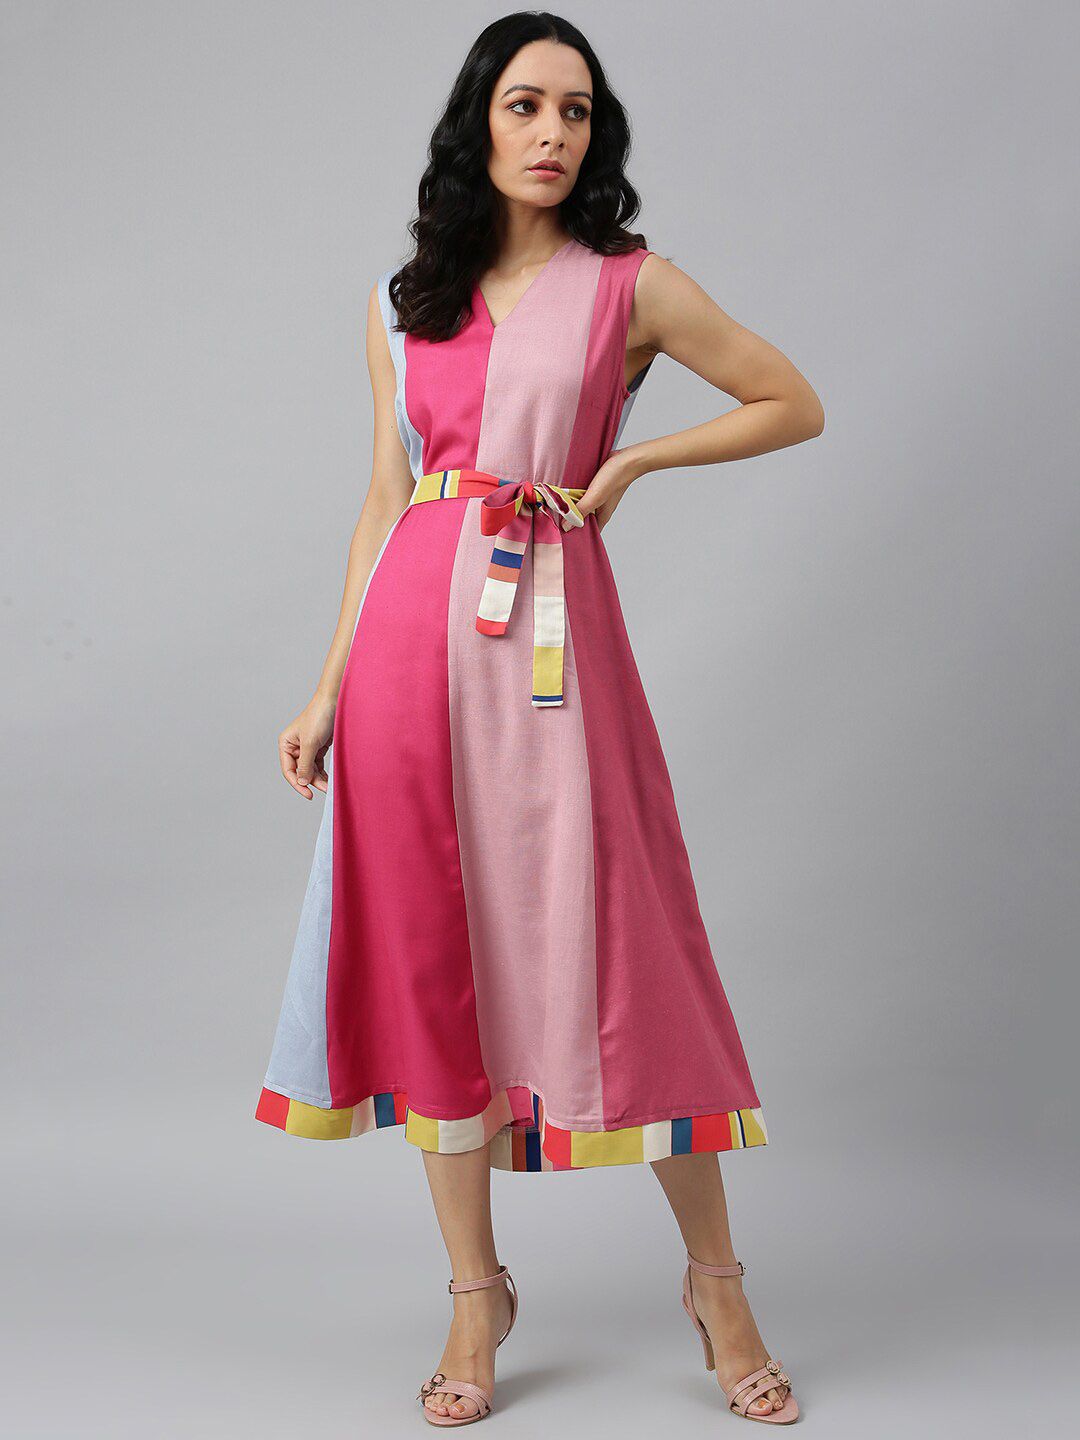 W Pink Colourblocked Chiffon Midi Dress Price in India